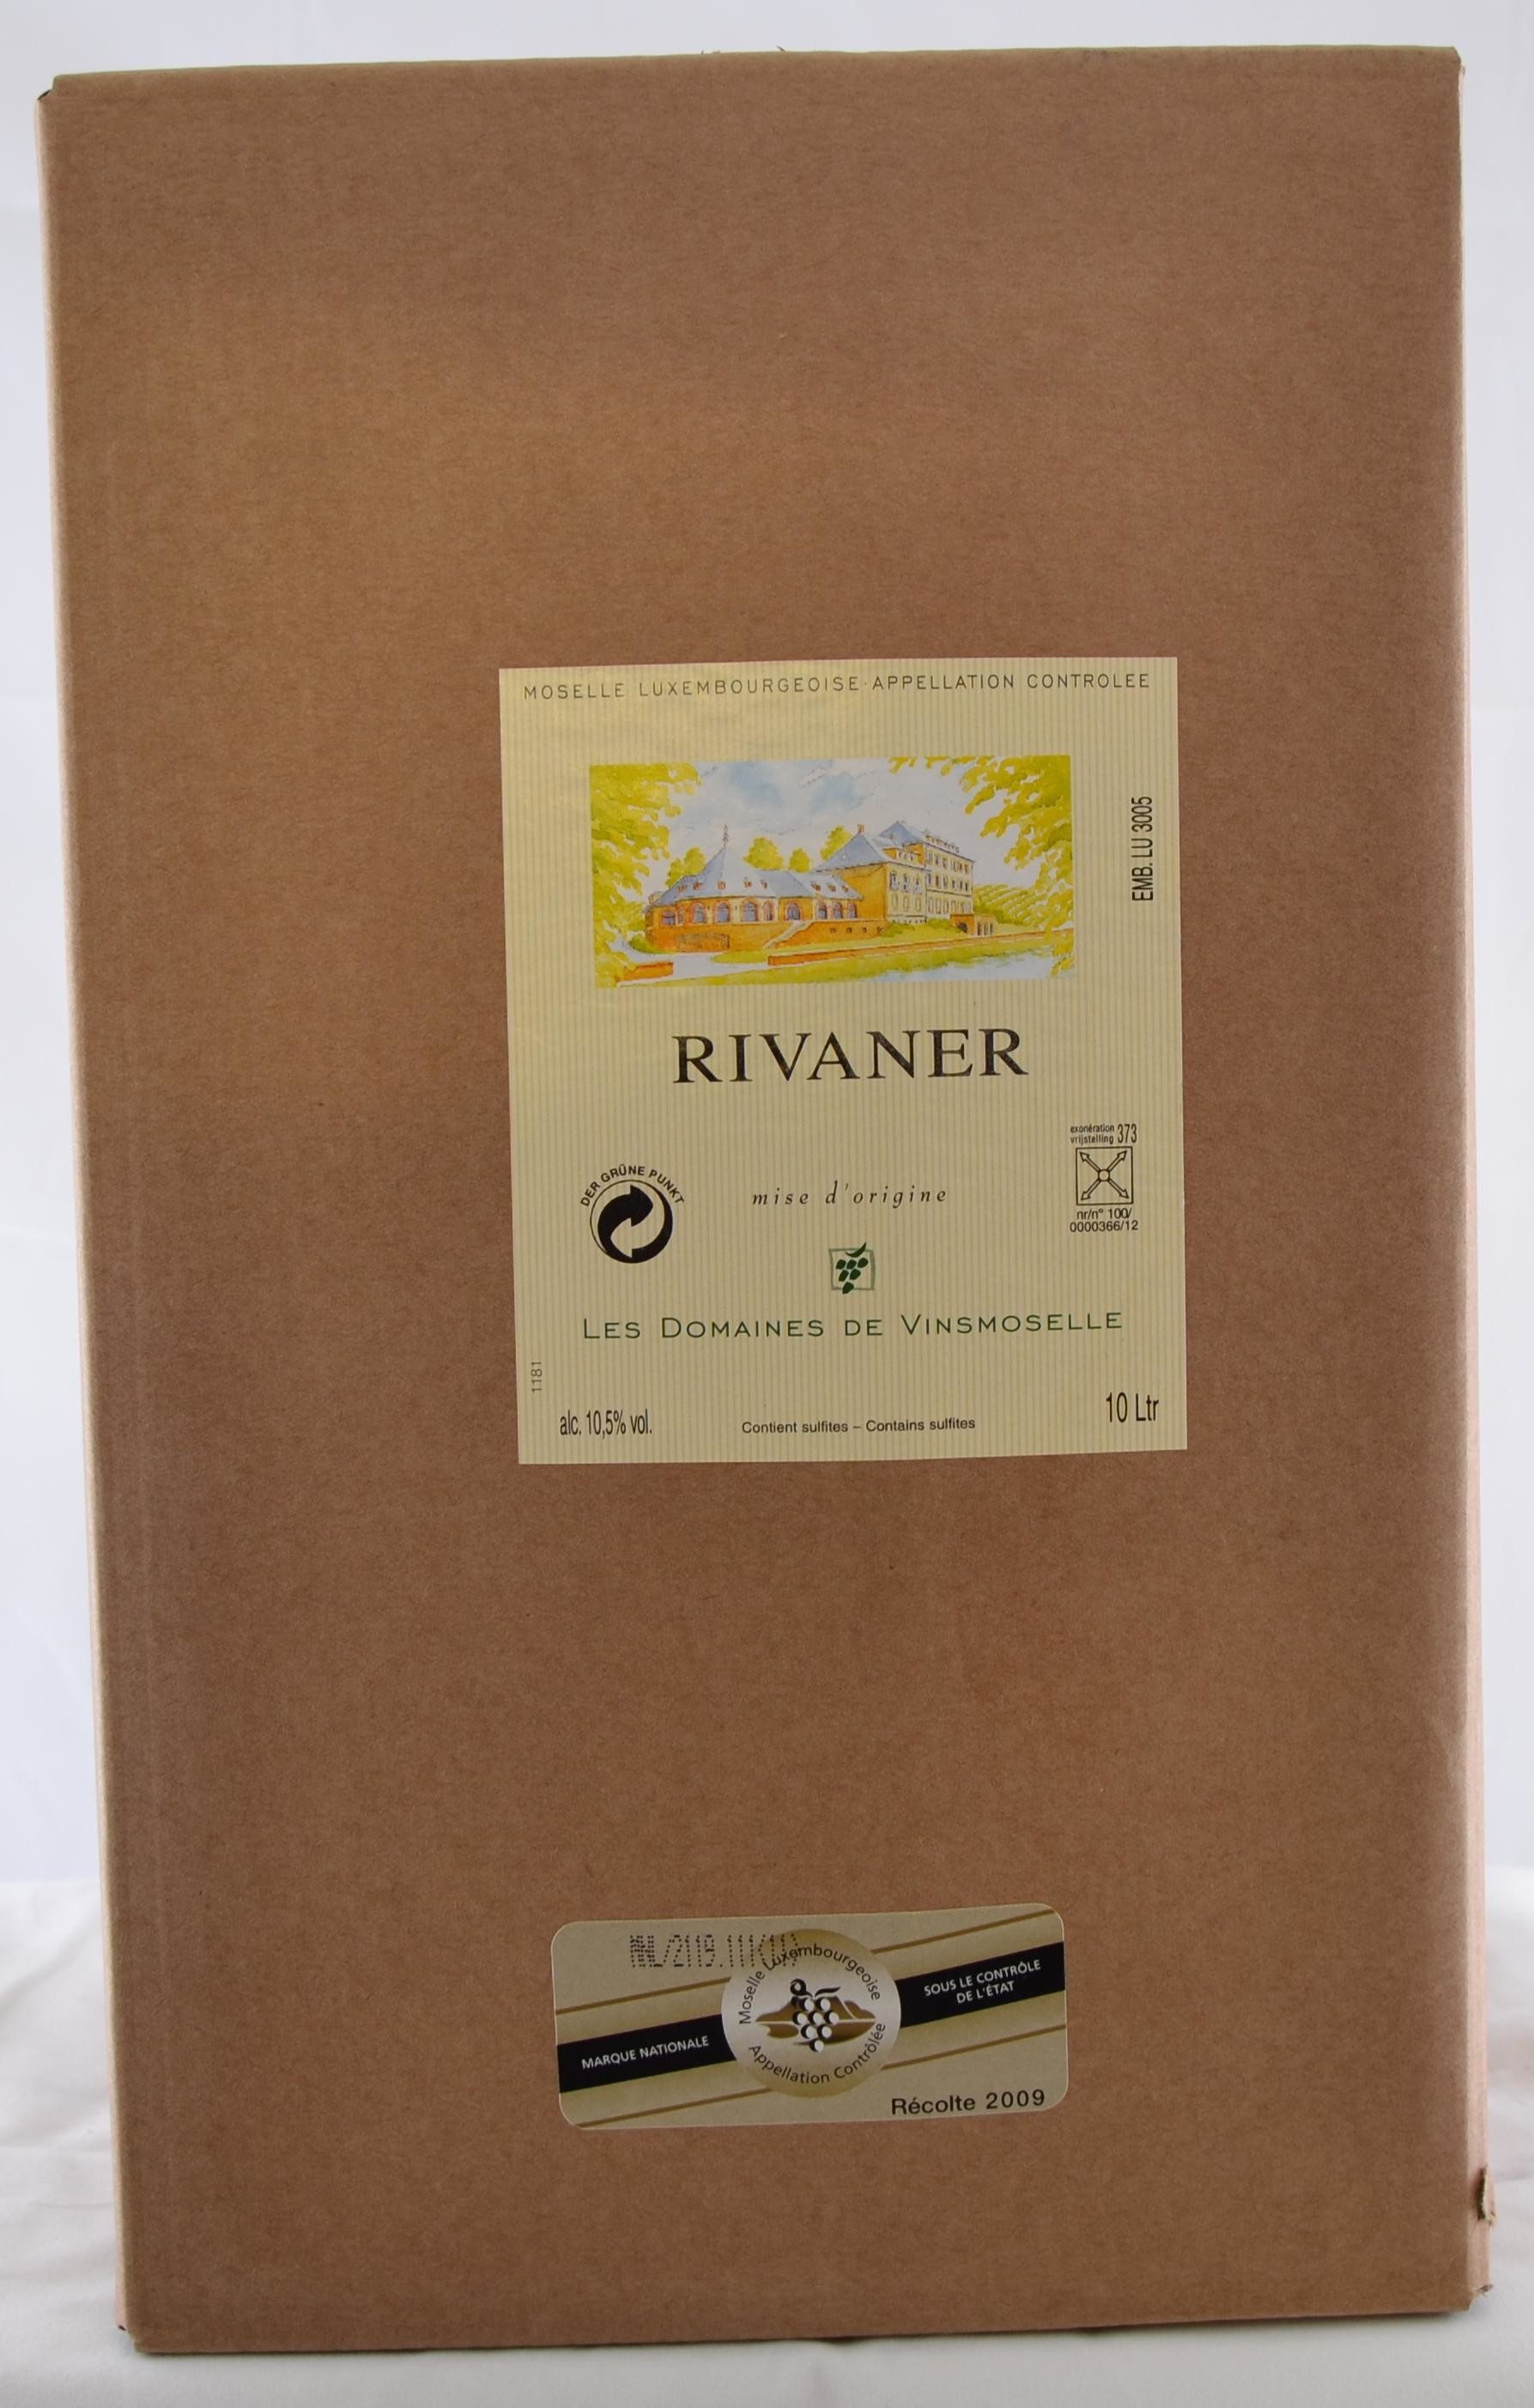 Rivaner Vinsmoselle 10 Liter  BIB Marque National